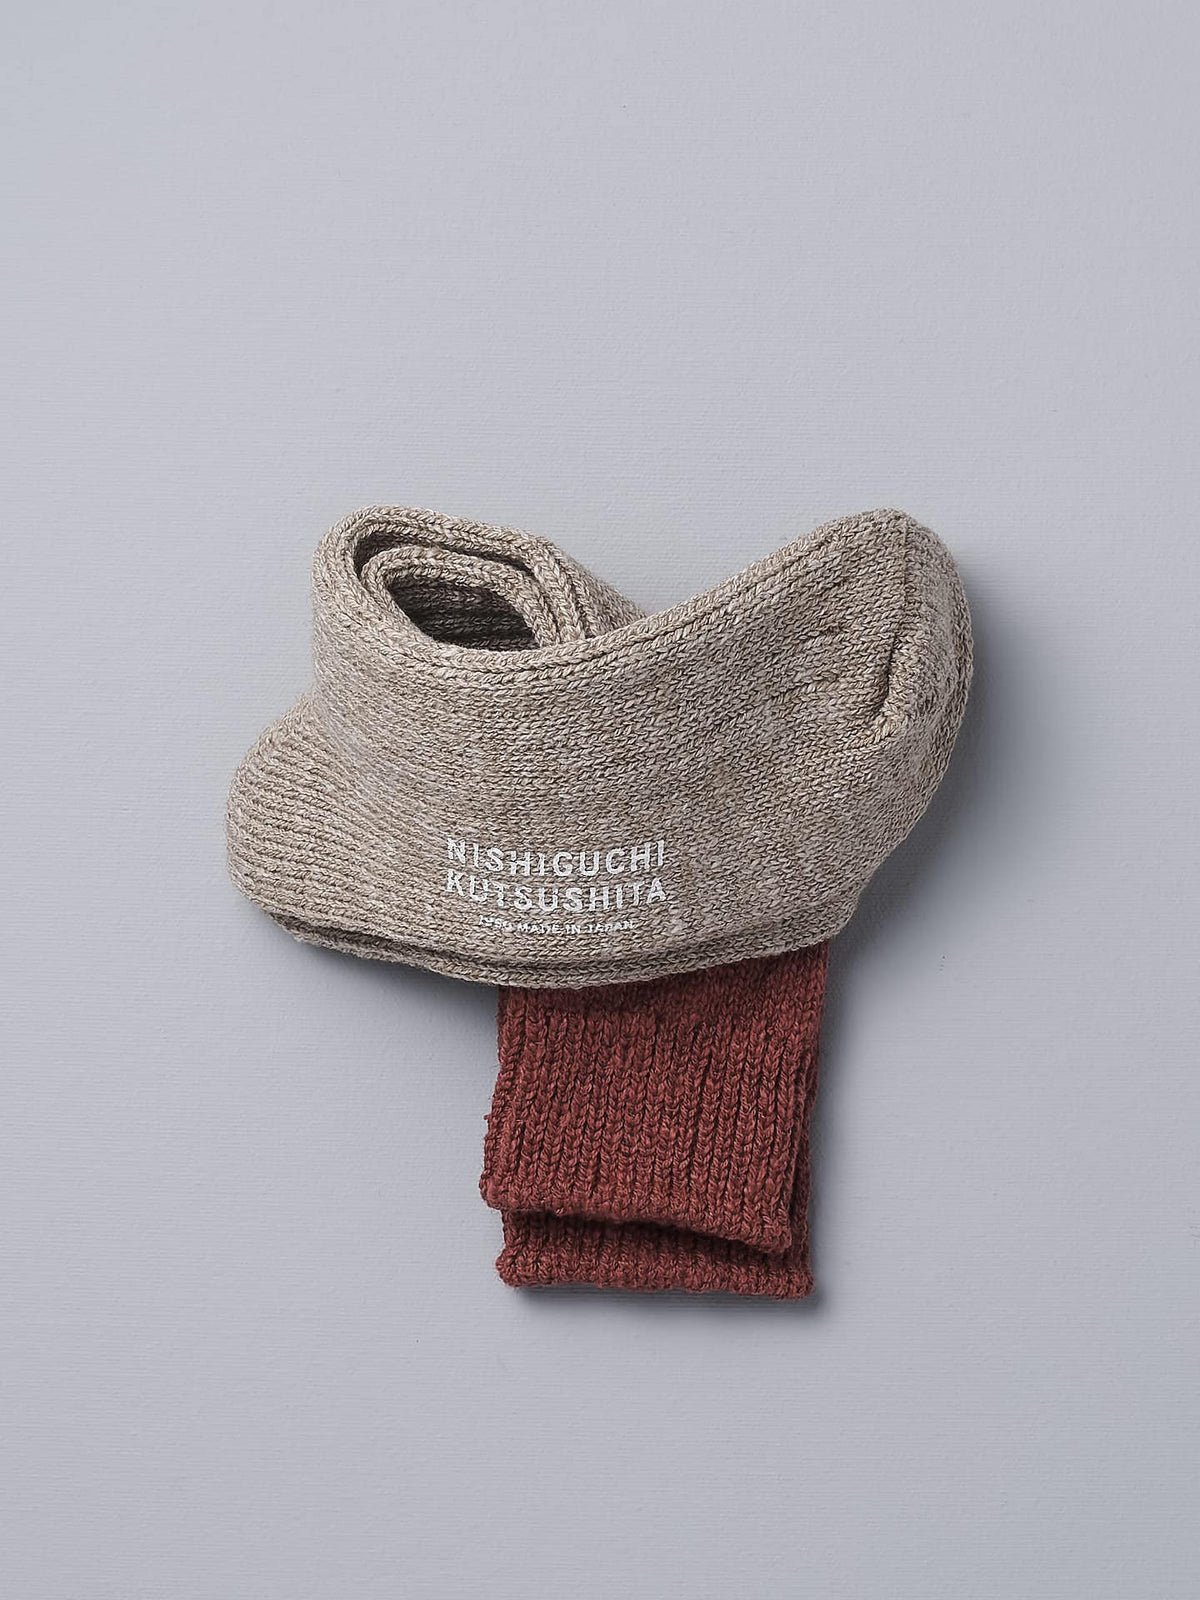 A pair of Boston Slab Socks – Red Brick by Nishiguchi Kutsushita on a grey surface.